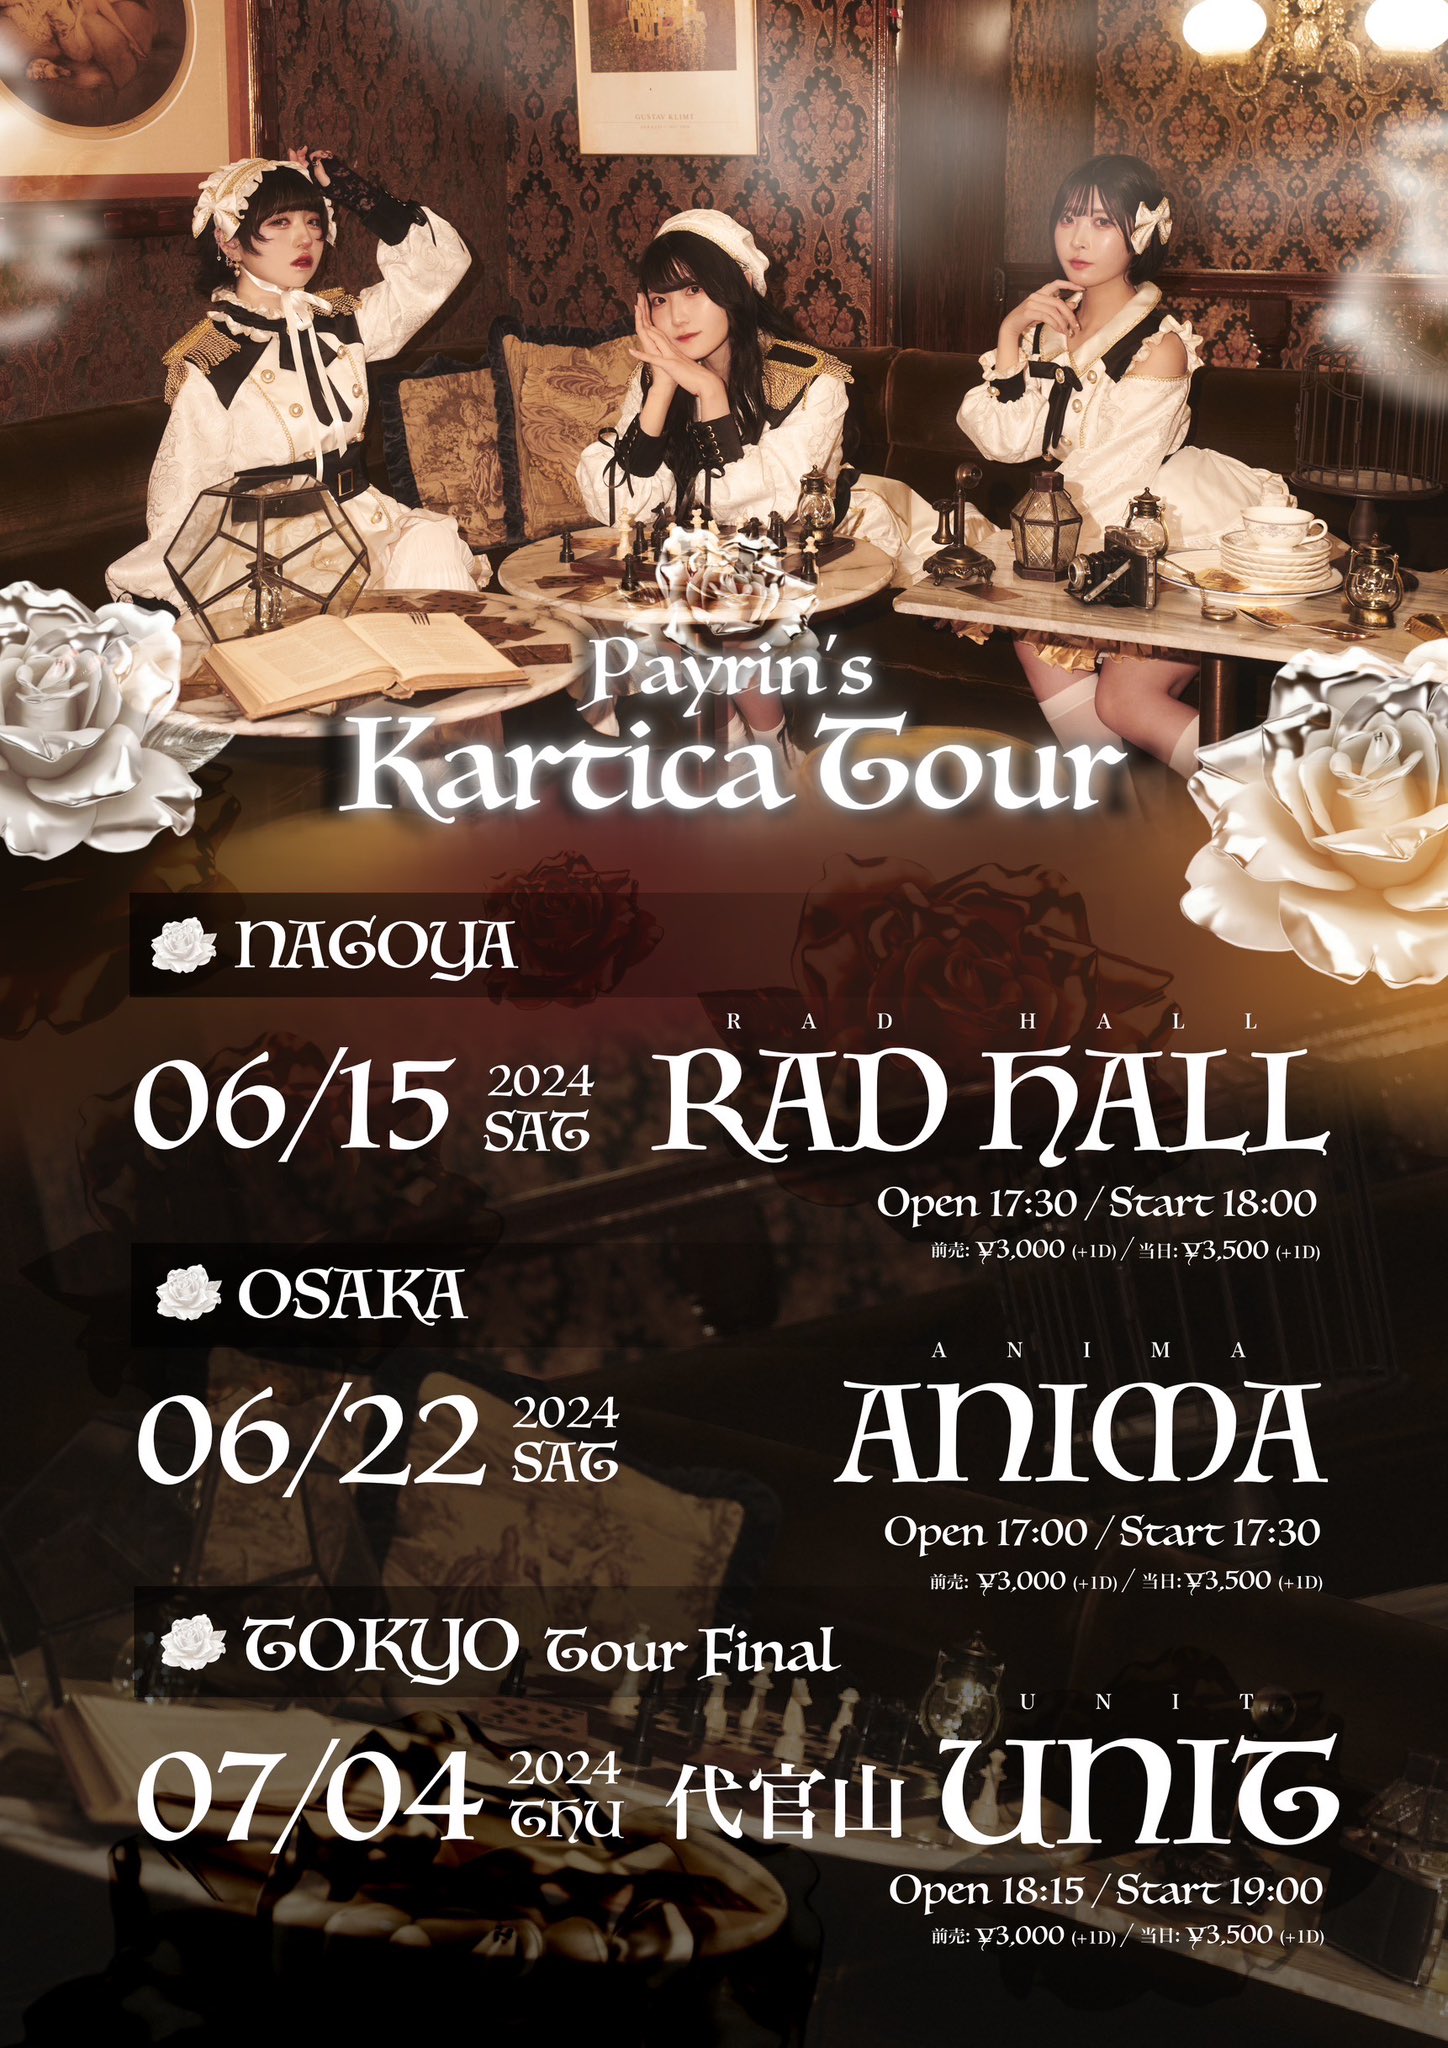 Payrin’s Kartica Tour